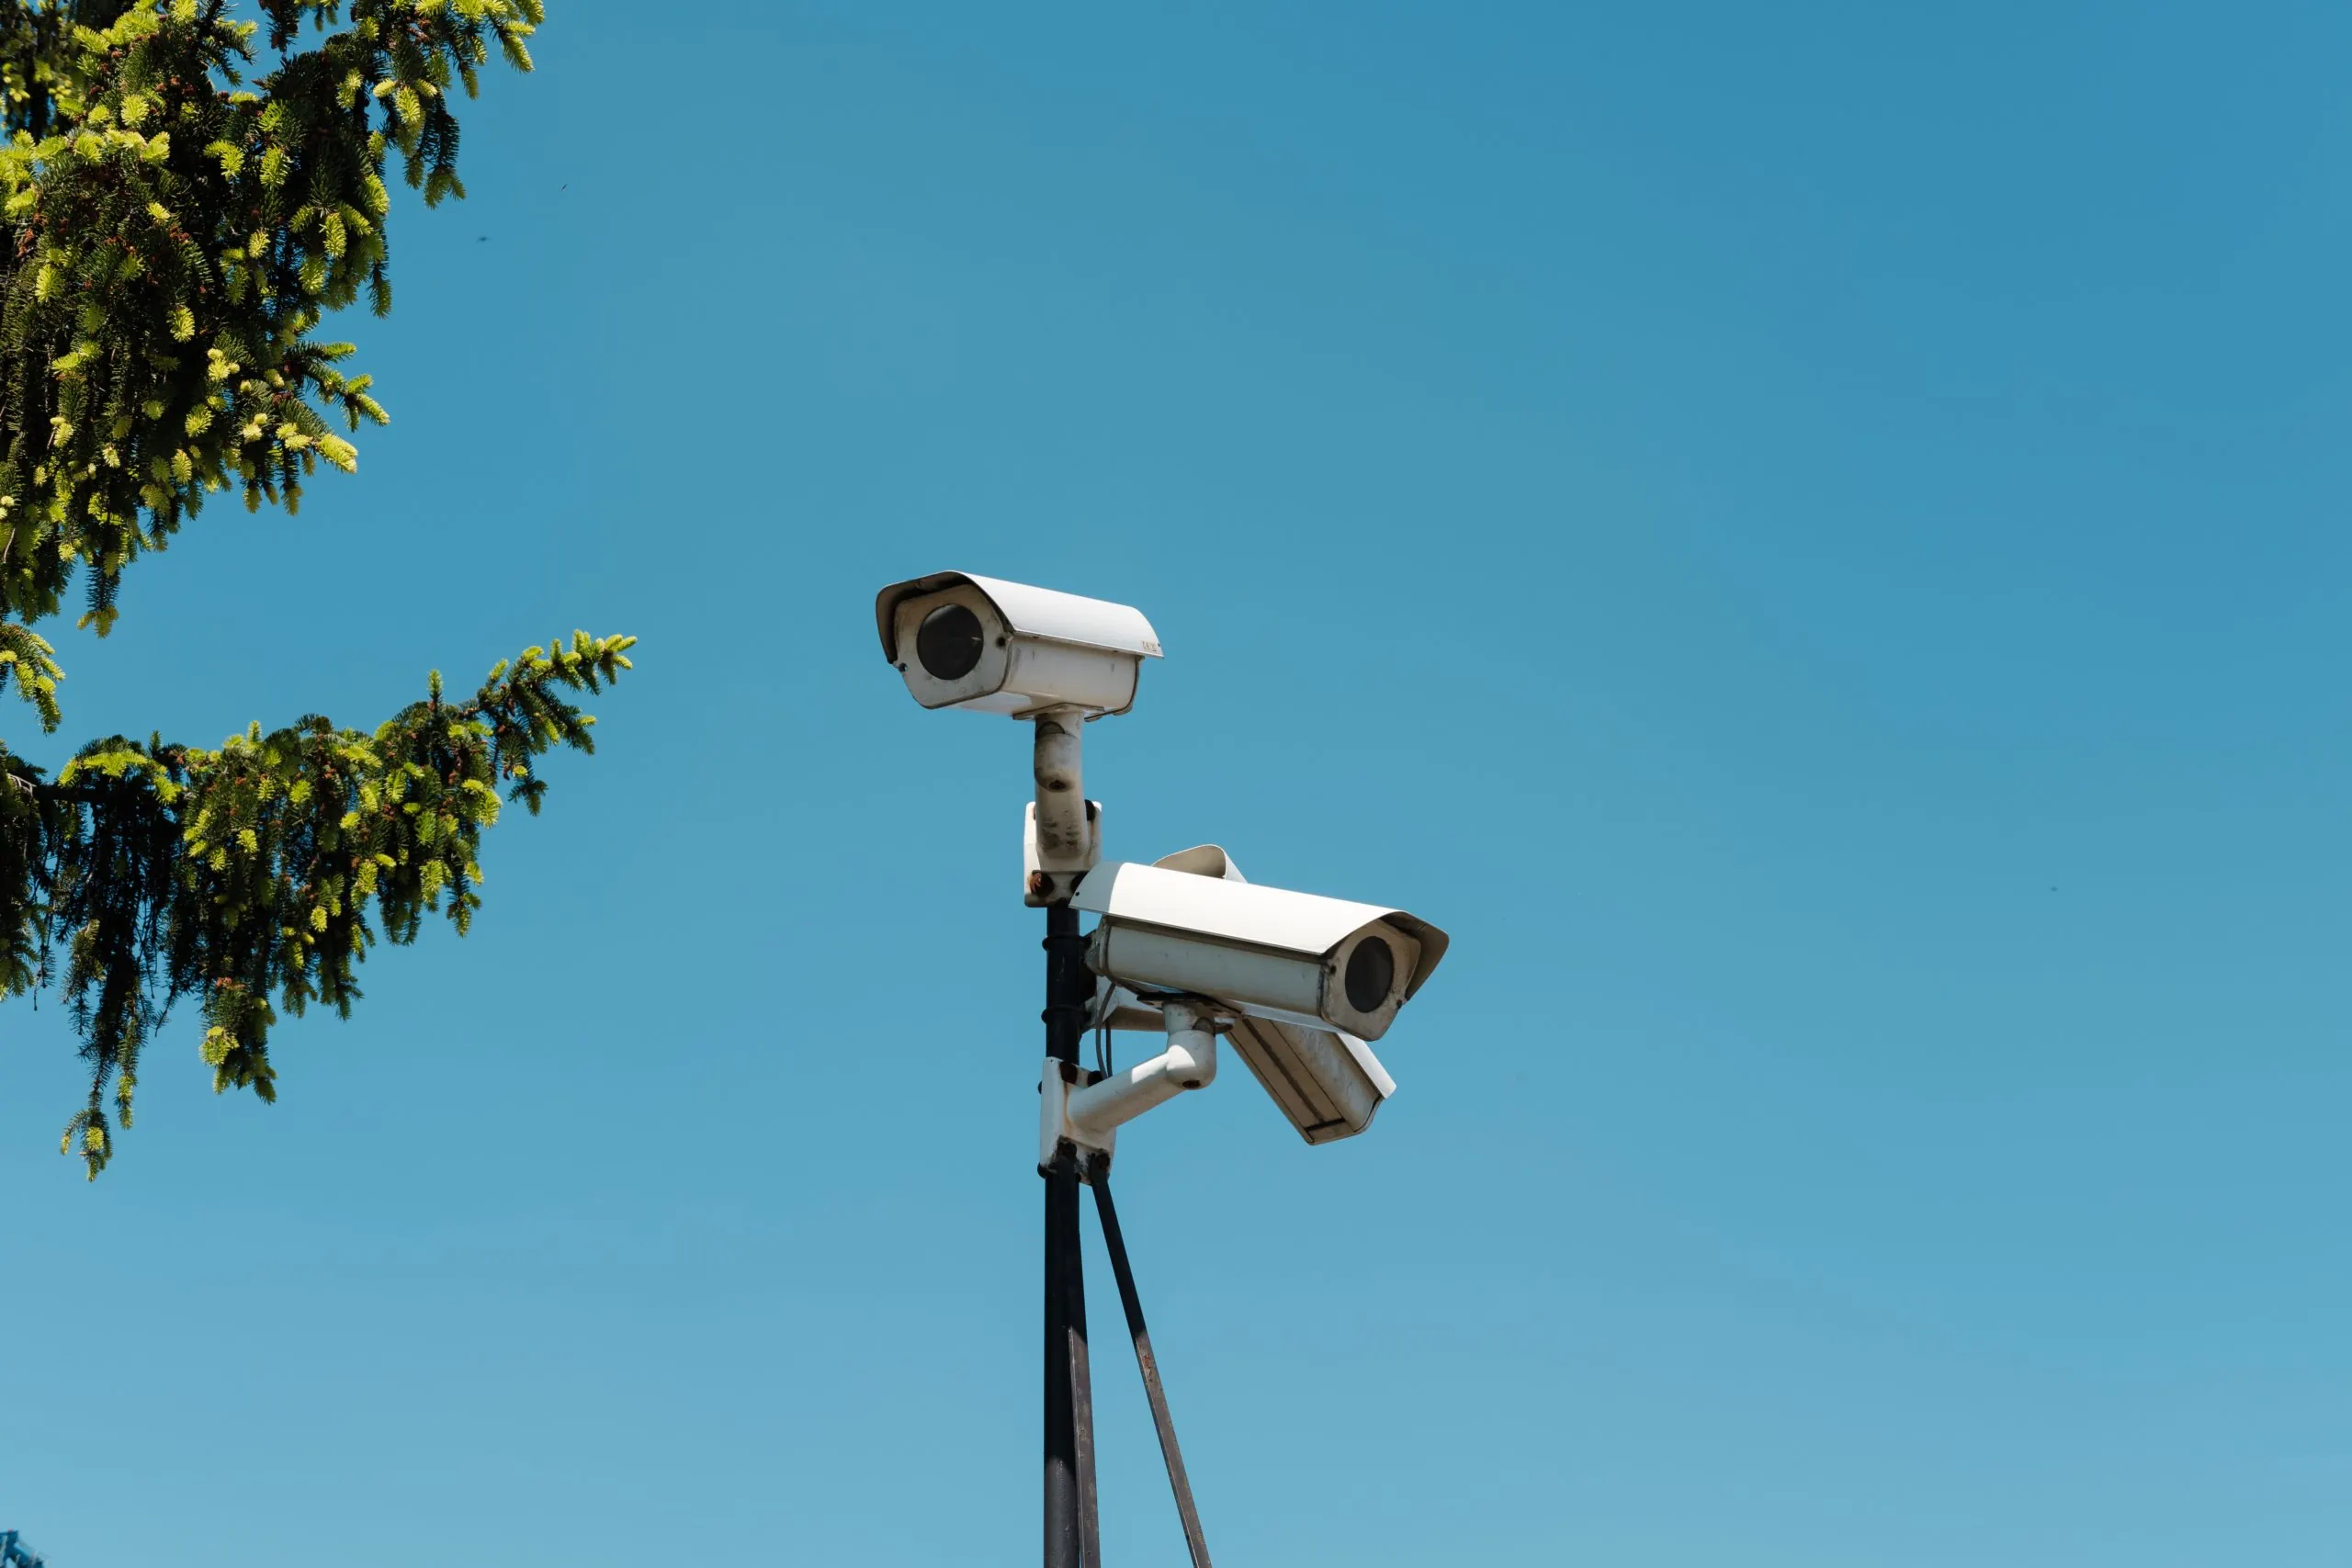 NVR Cameras on pole monitoring environment 